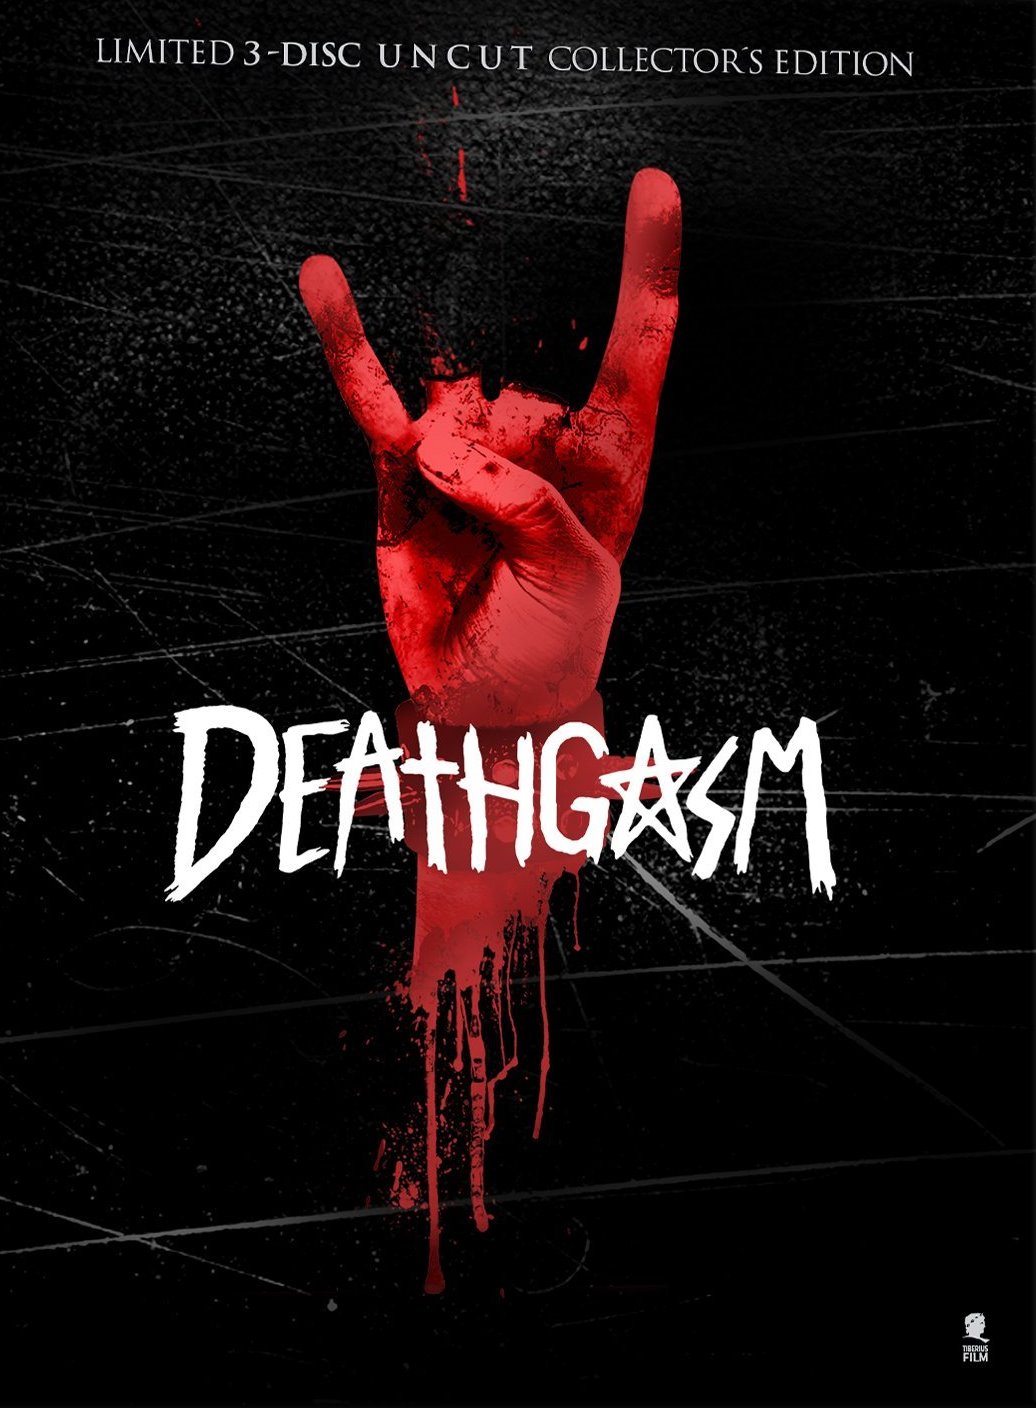 Cover - Deathgasm.jpg